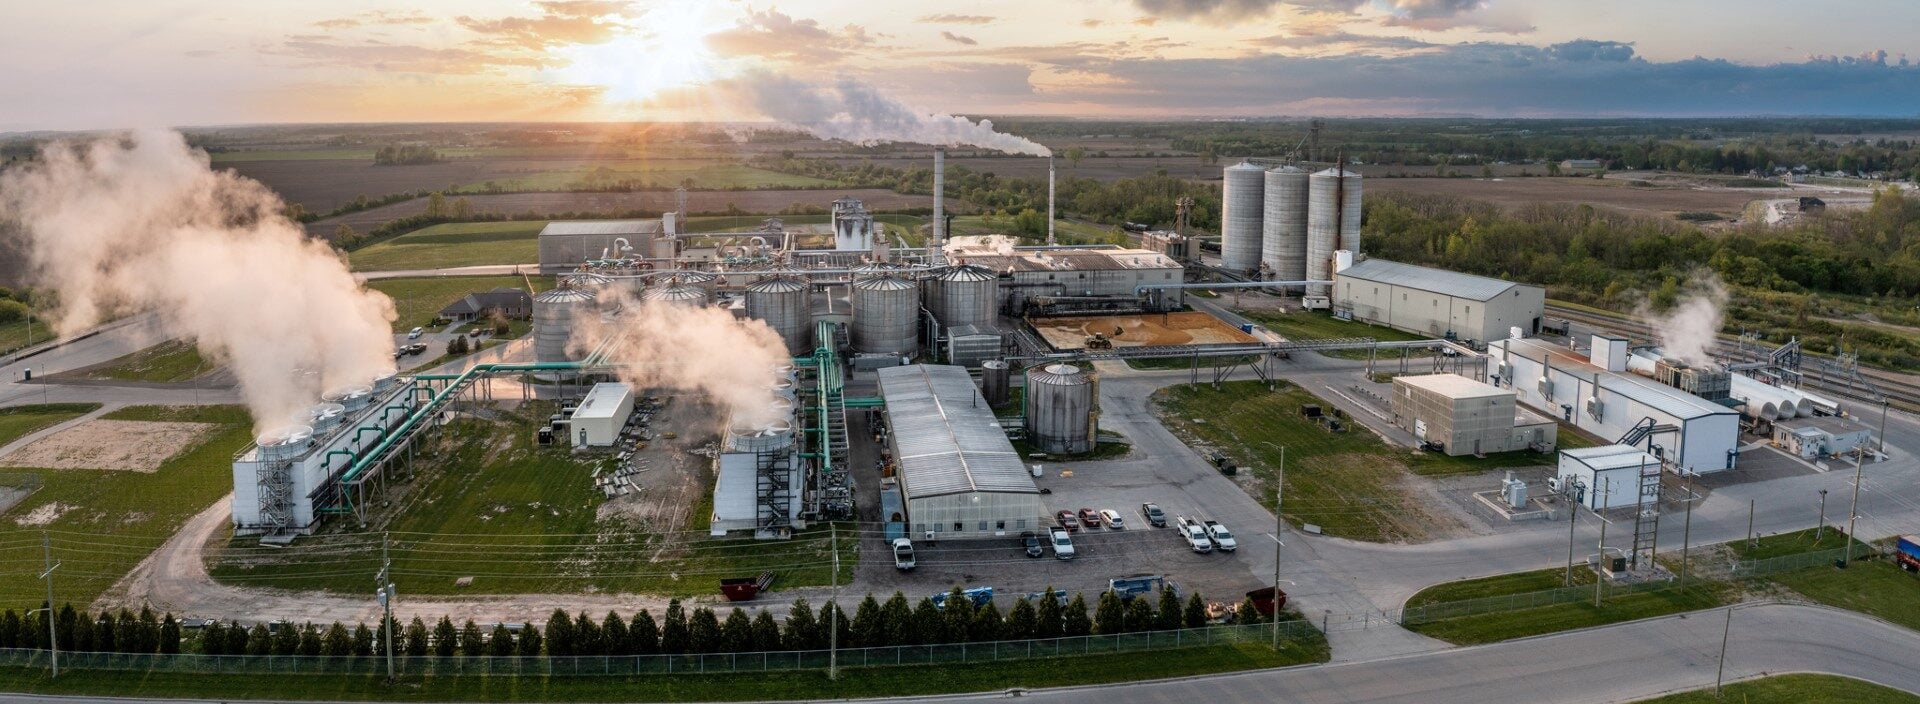 The IGCP Ethanol Plant